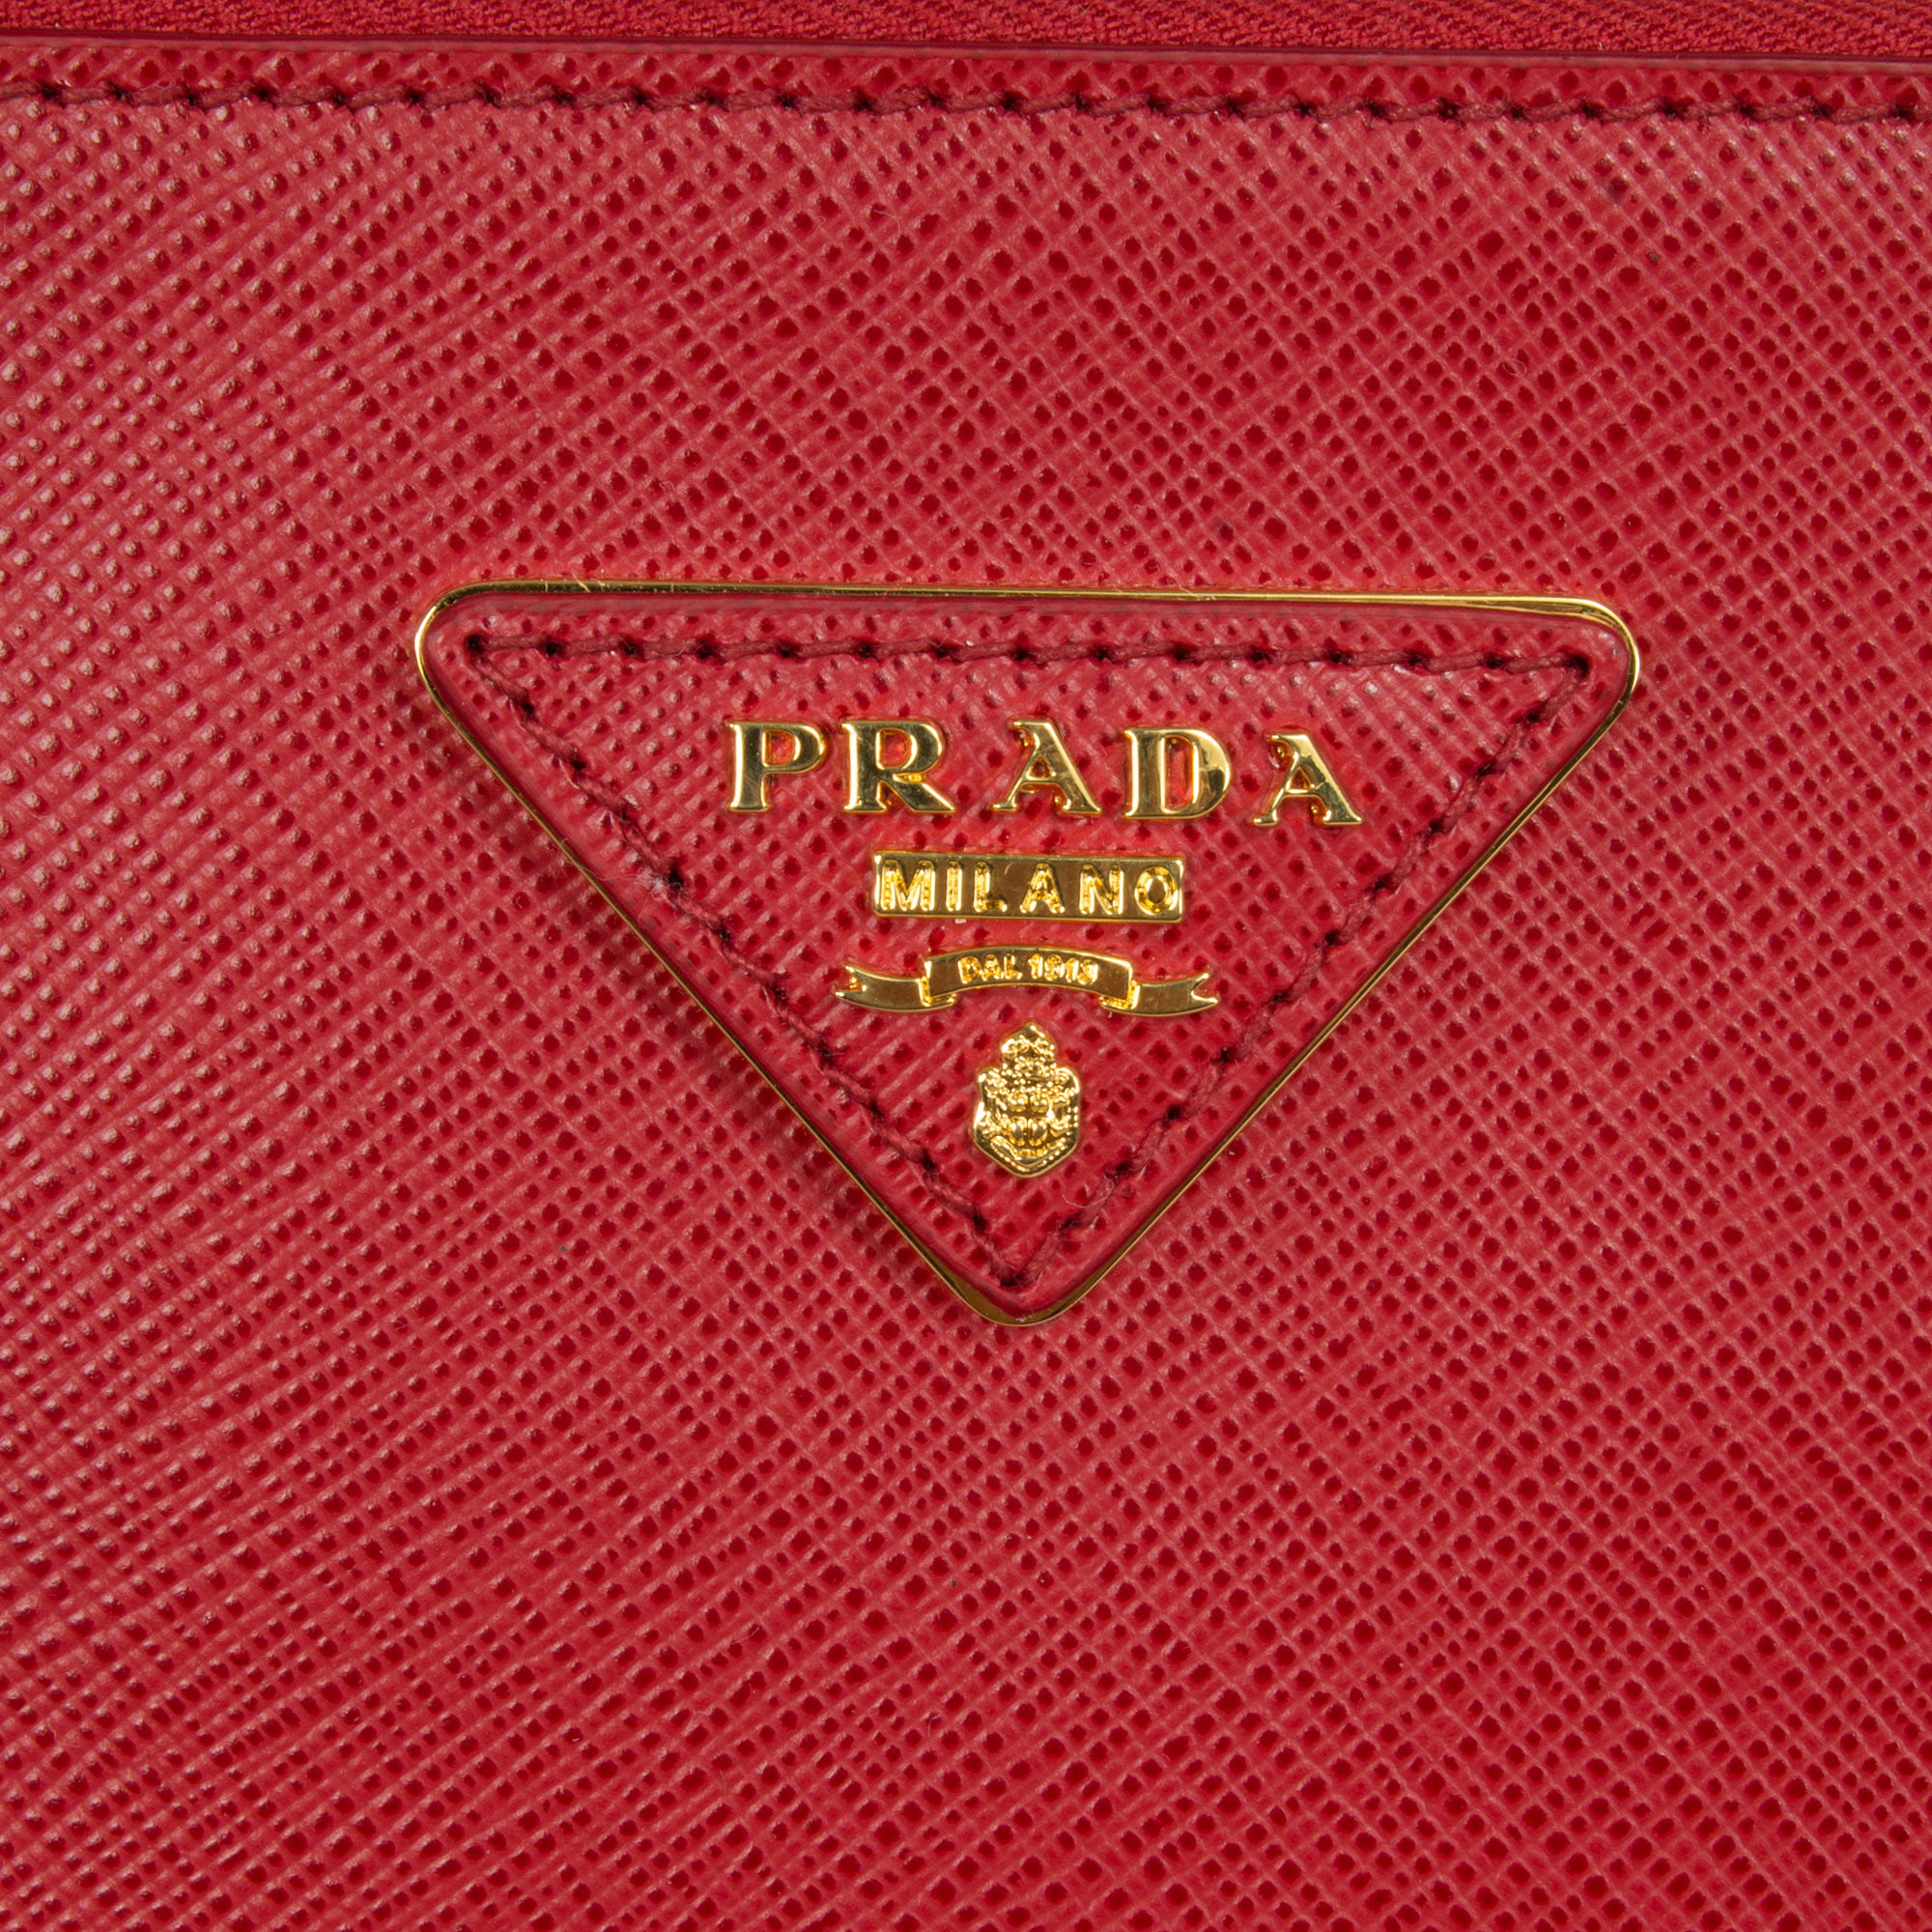 Prada Ladies Fiery Red Monochrome Saffiano Leather Shoulder Bag-Small  1BD127OOO2ERX F068Z 8050533319225 - Handbags - Jomashop